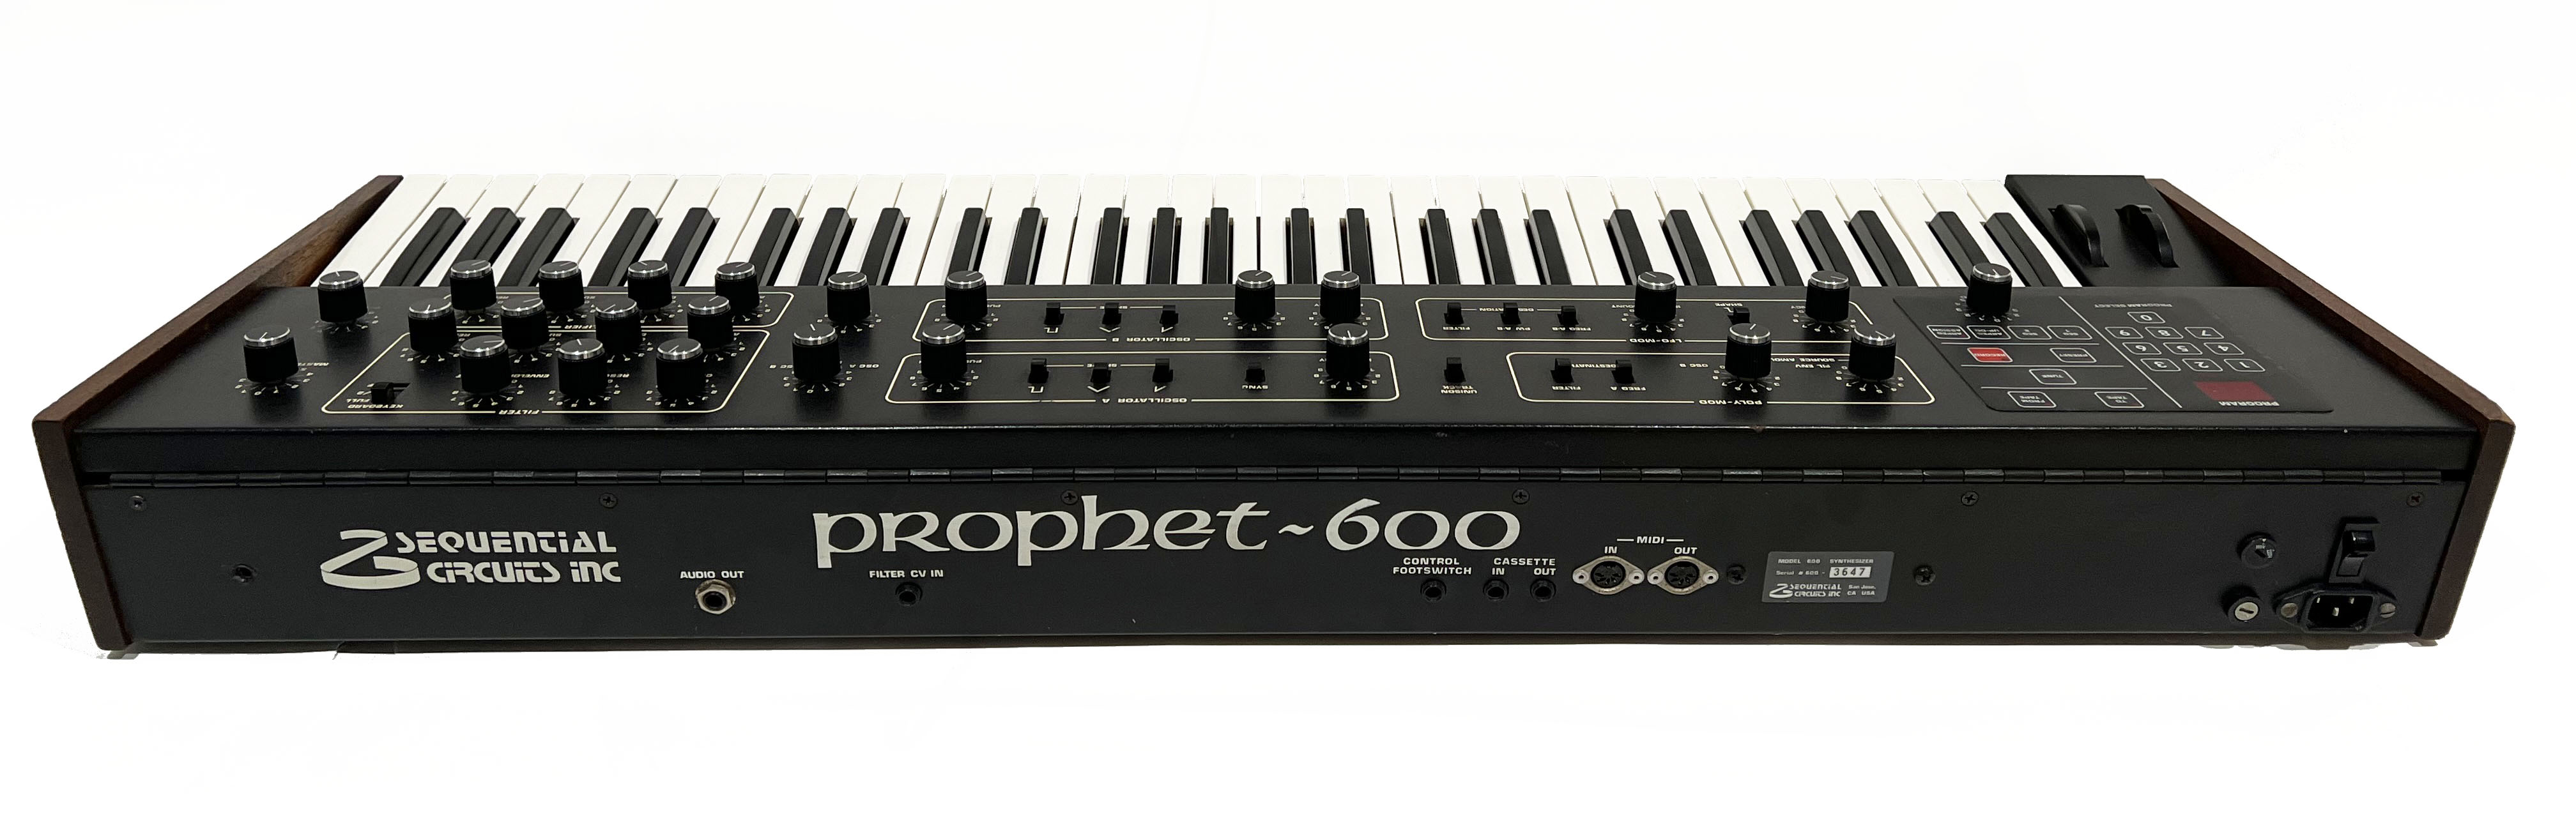 Sequential Circuits Prophet-600